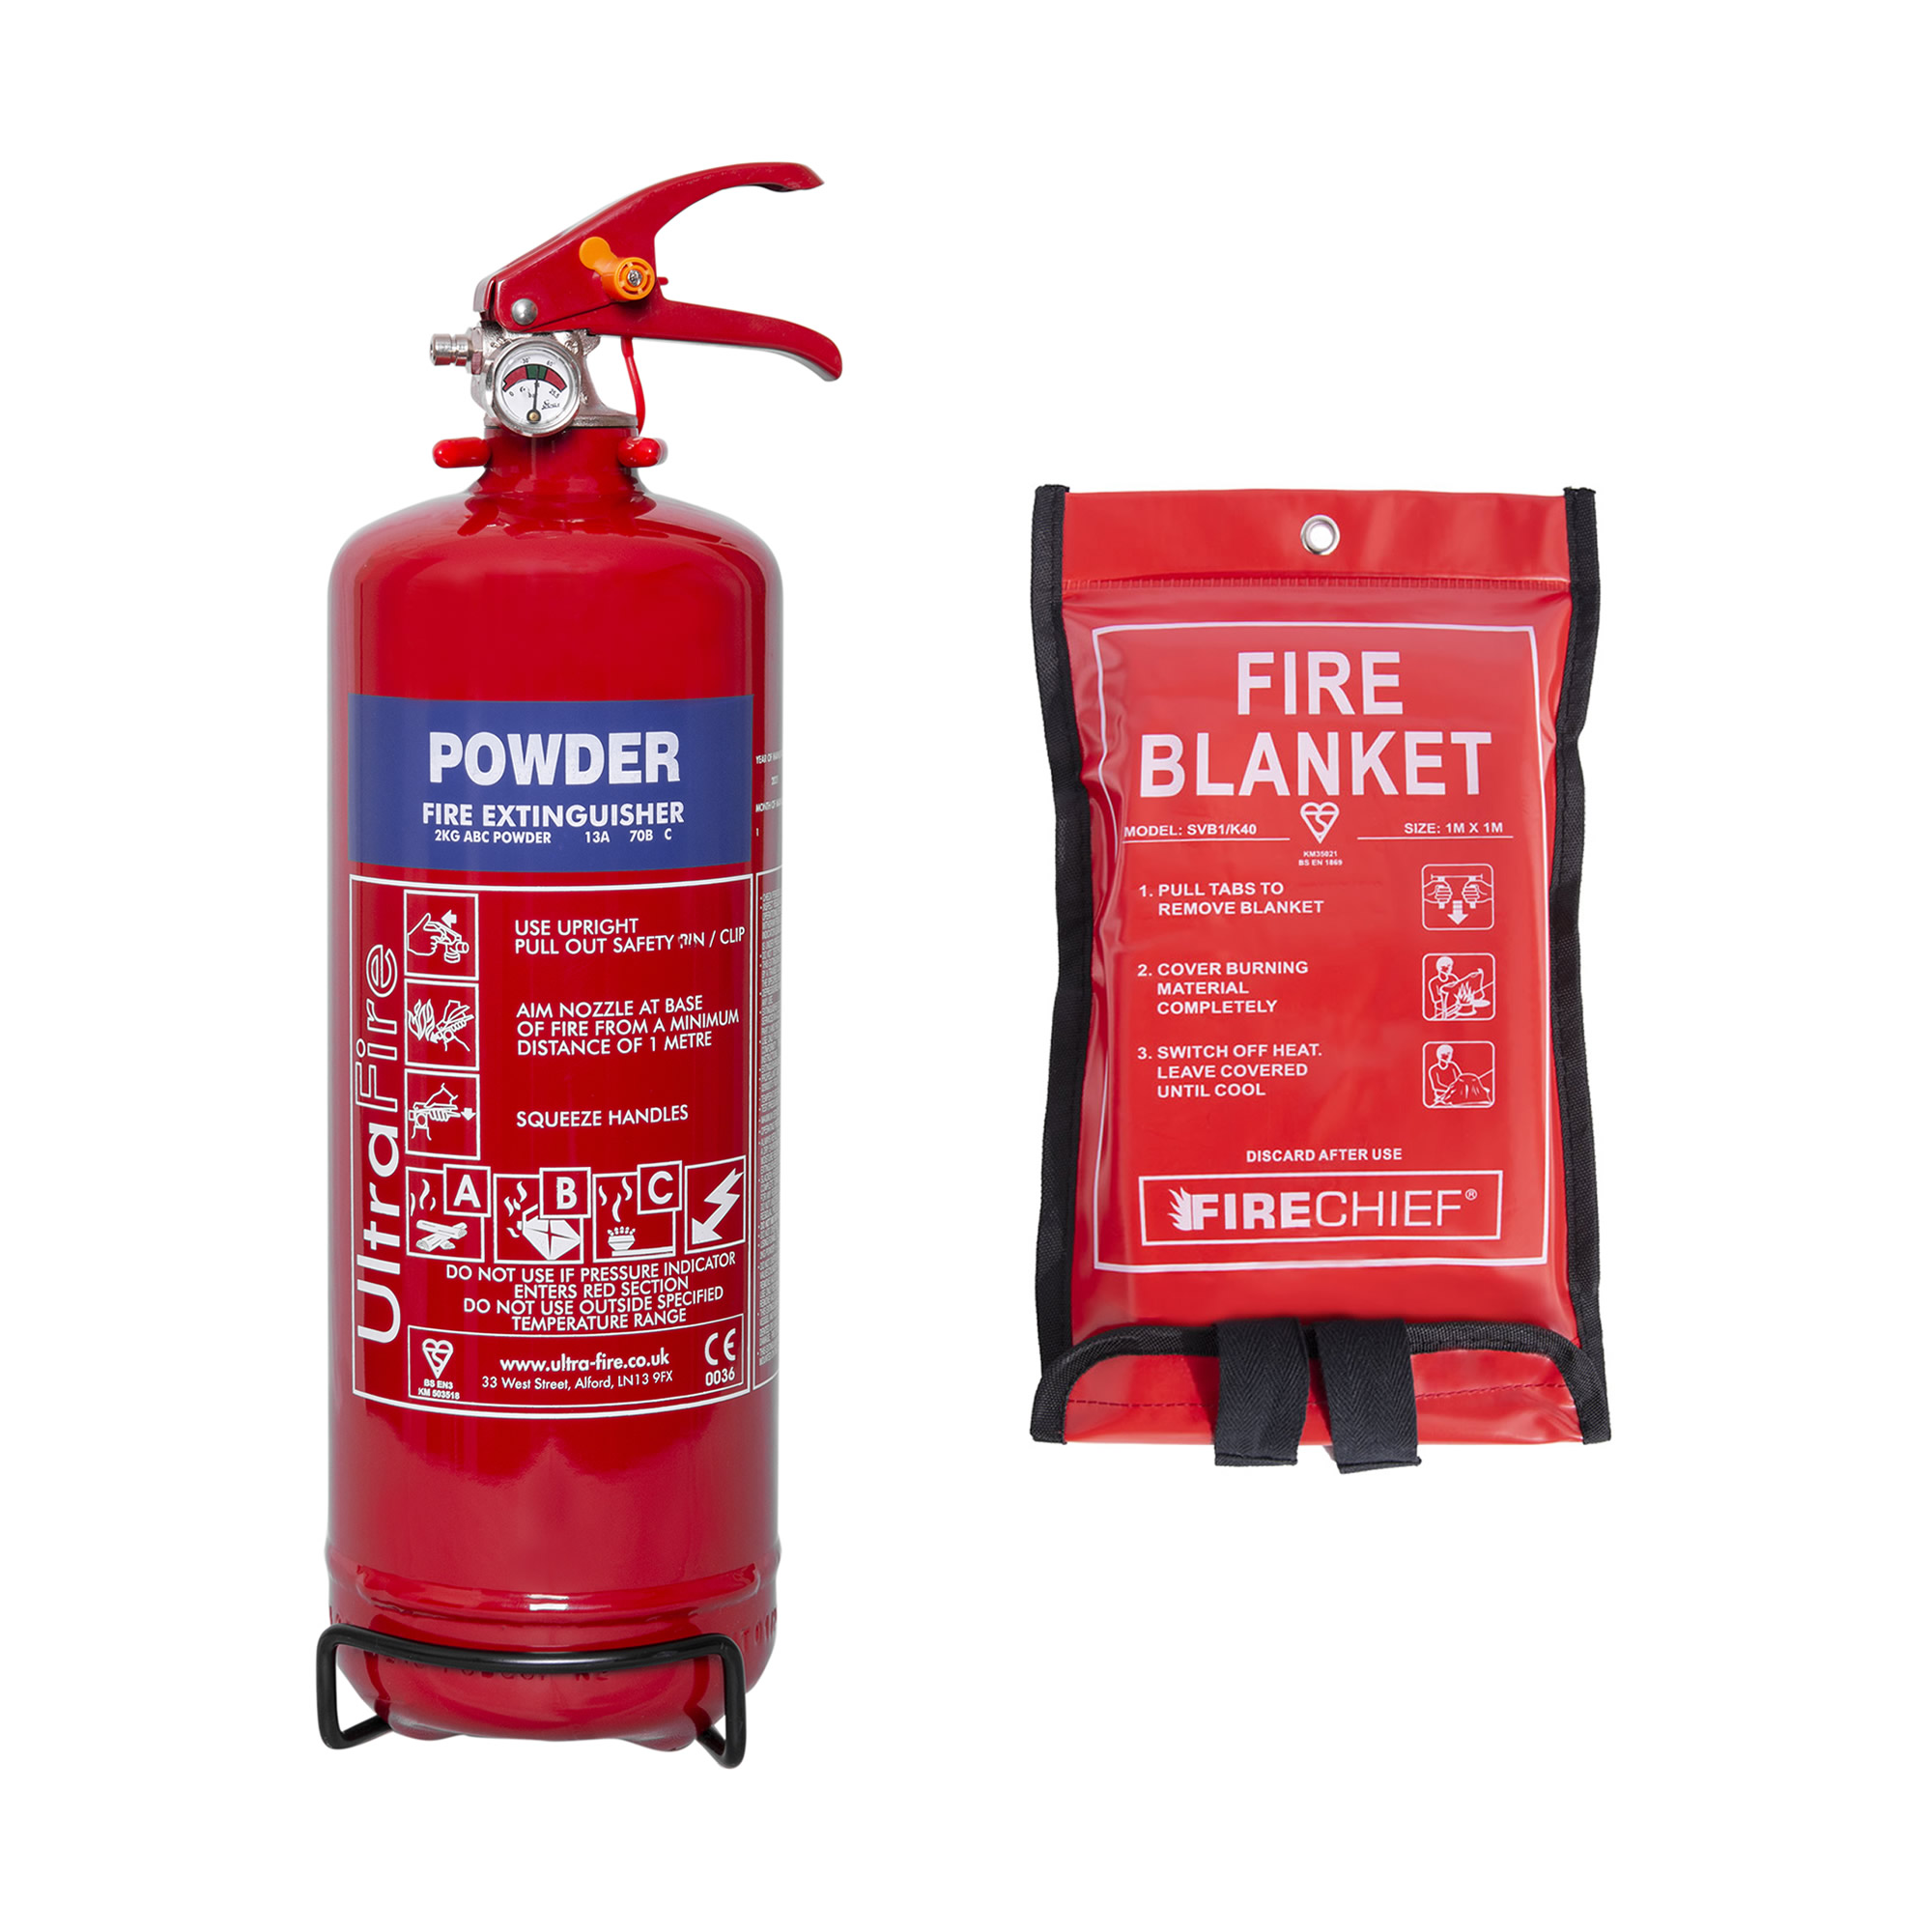 2kg Powder Fire Extinguisher + Fire Blanket Offer